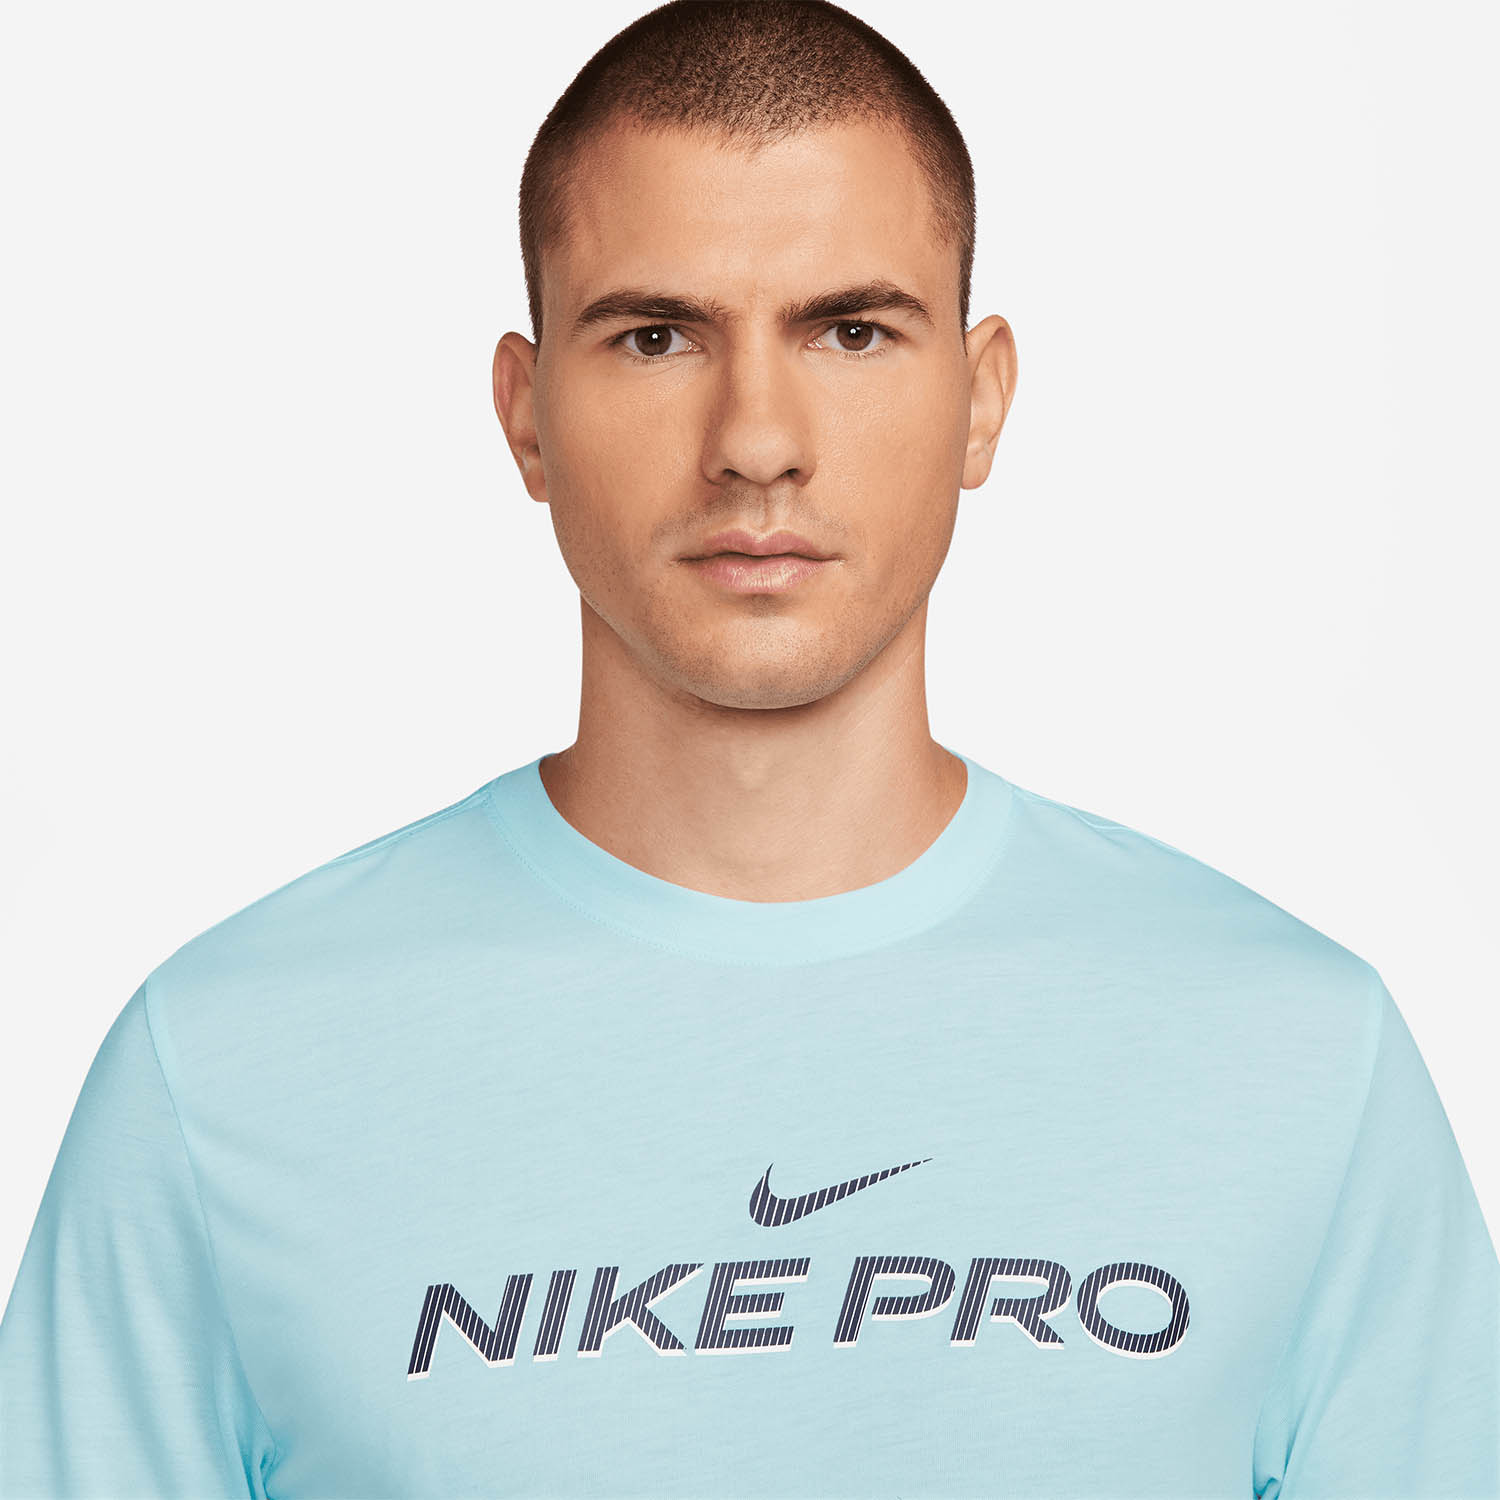 Nike Pro Fitness T-Shirt - Glacier Blue